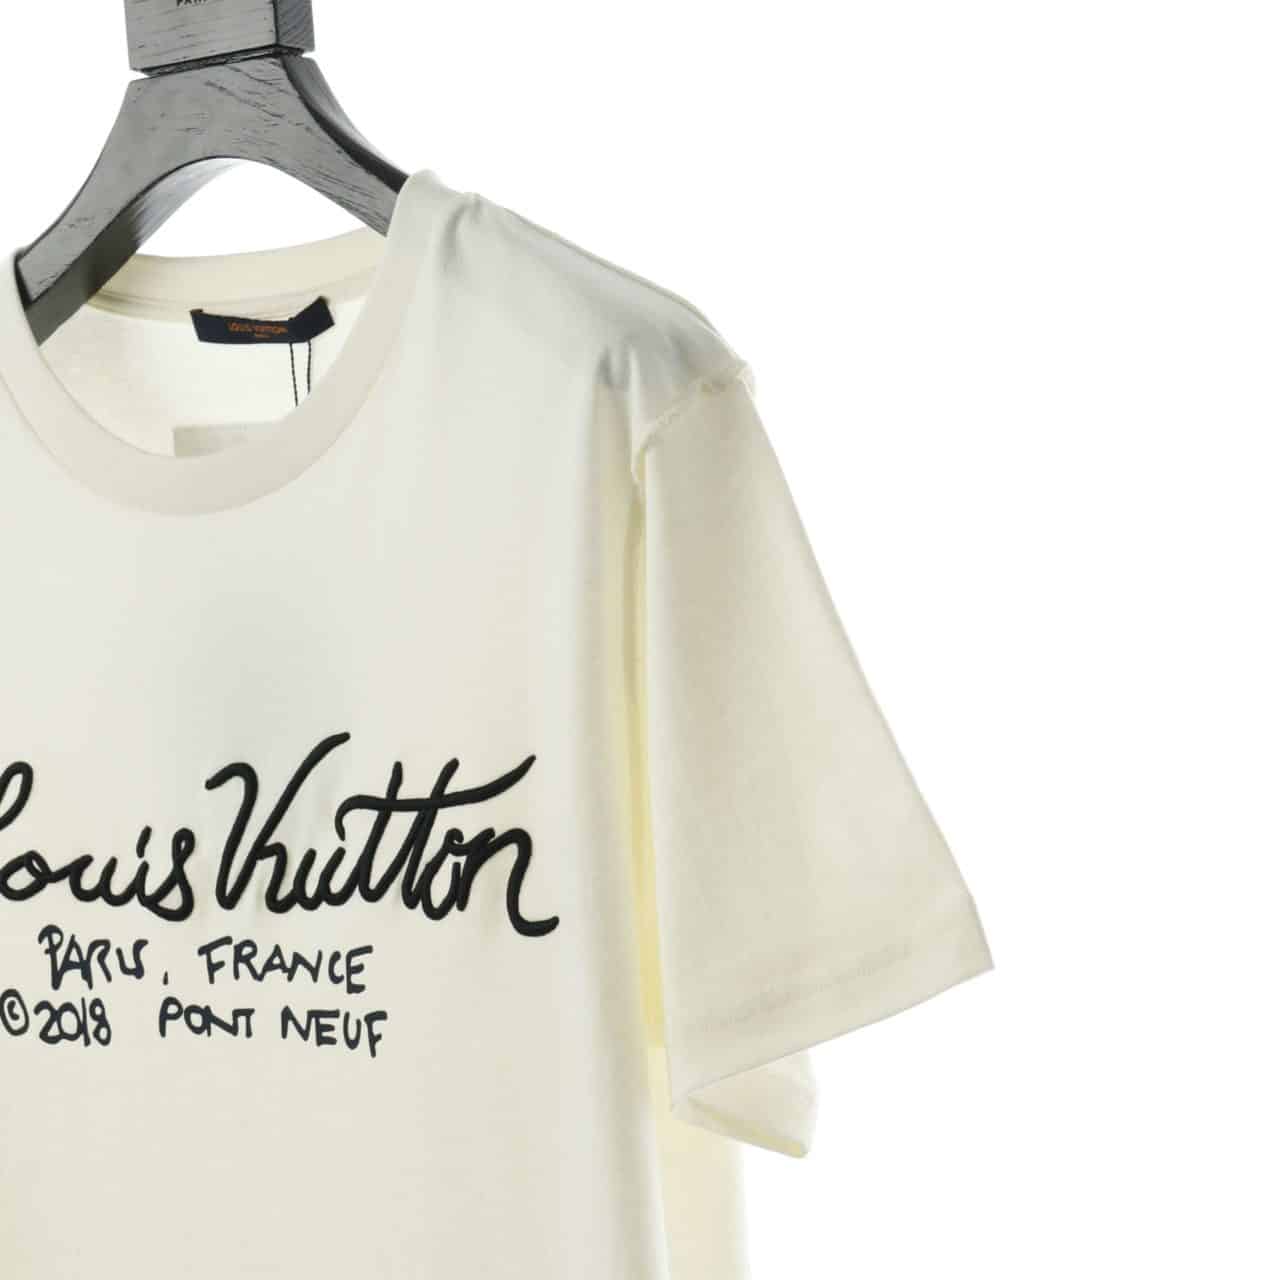 Louis Vuitton Embroidered Logo T-Shirt